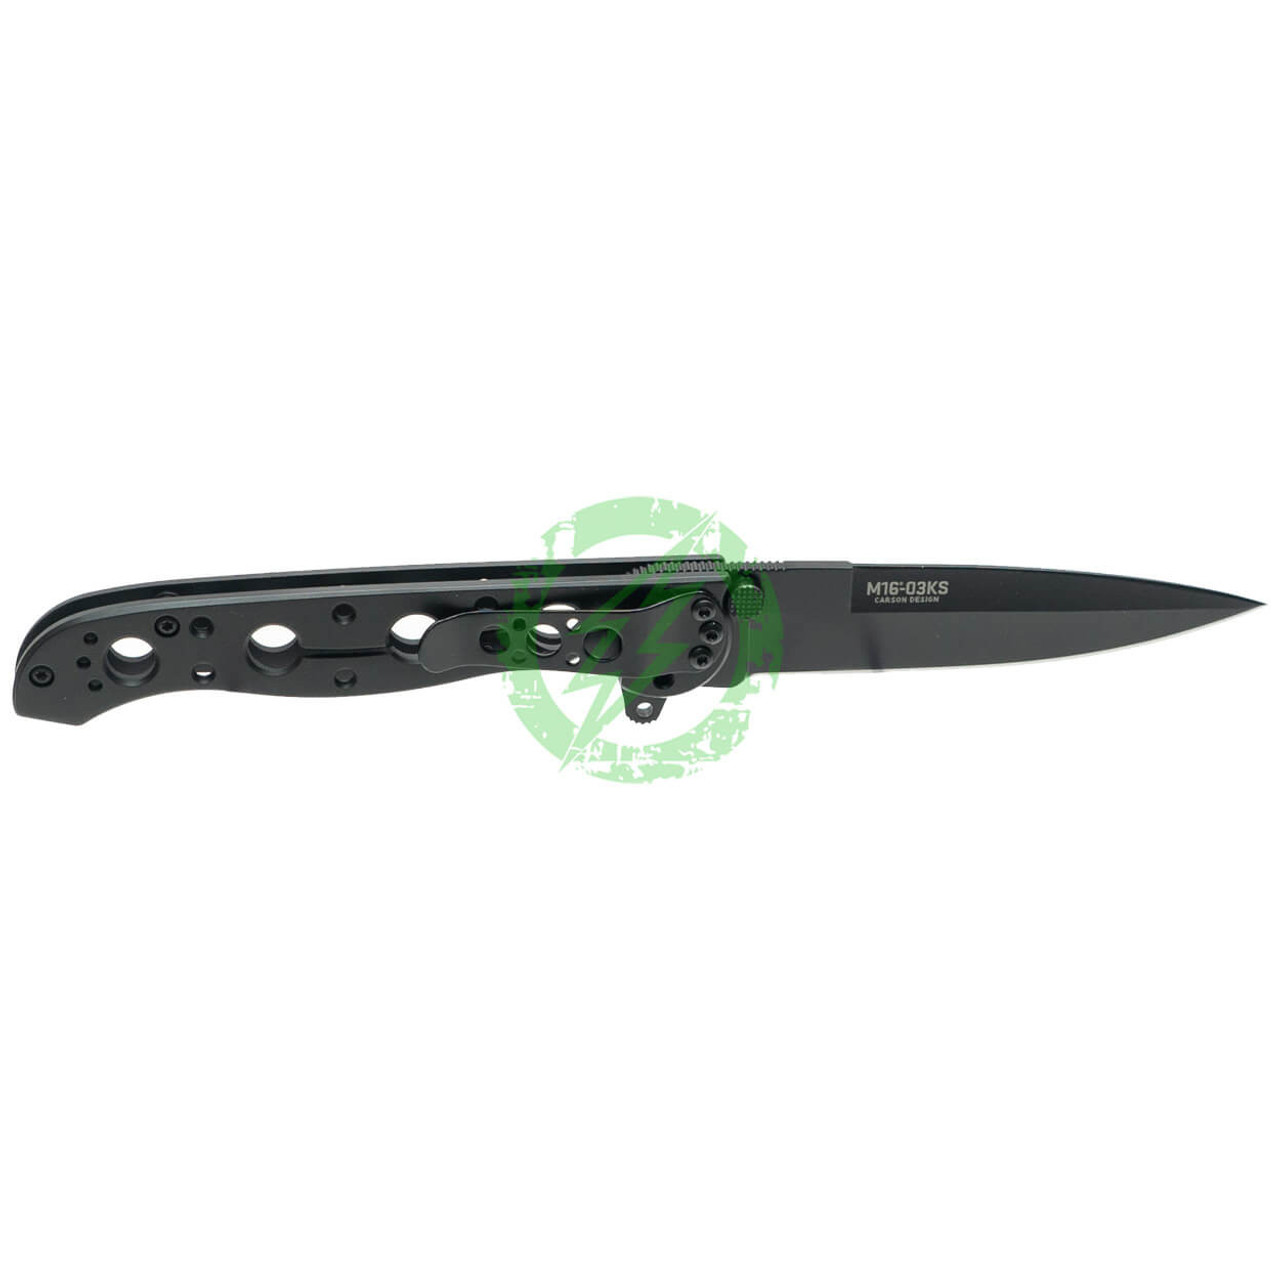 CRKT (Columbia River Knife Tool) CRKT M16-03KS Spear Point Black Folding Knife with 12C27 Sandvik Oxide Blade & Stainless Steel Handle 